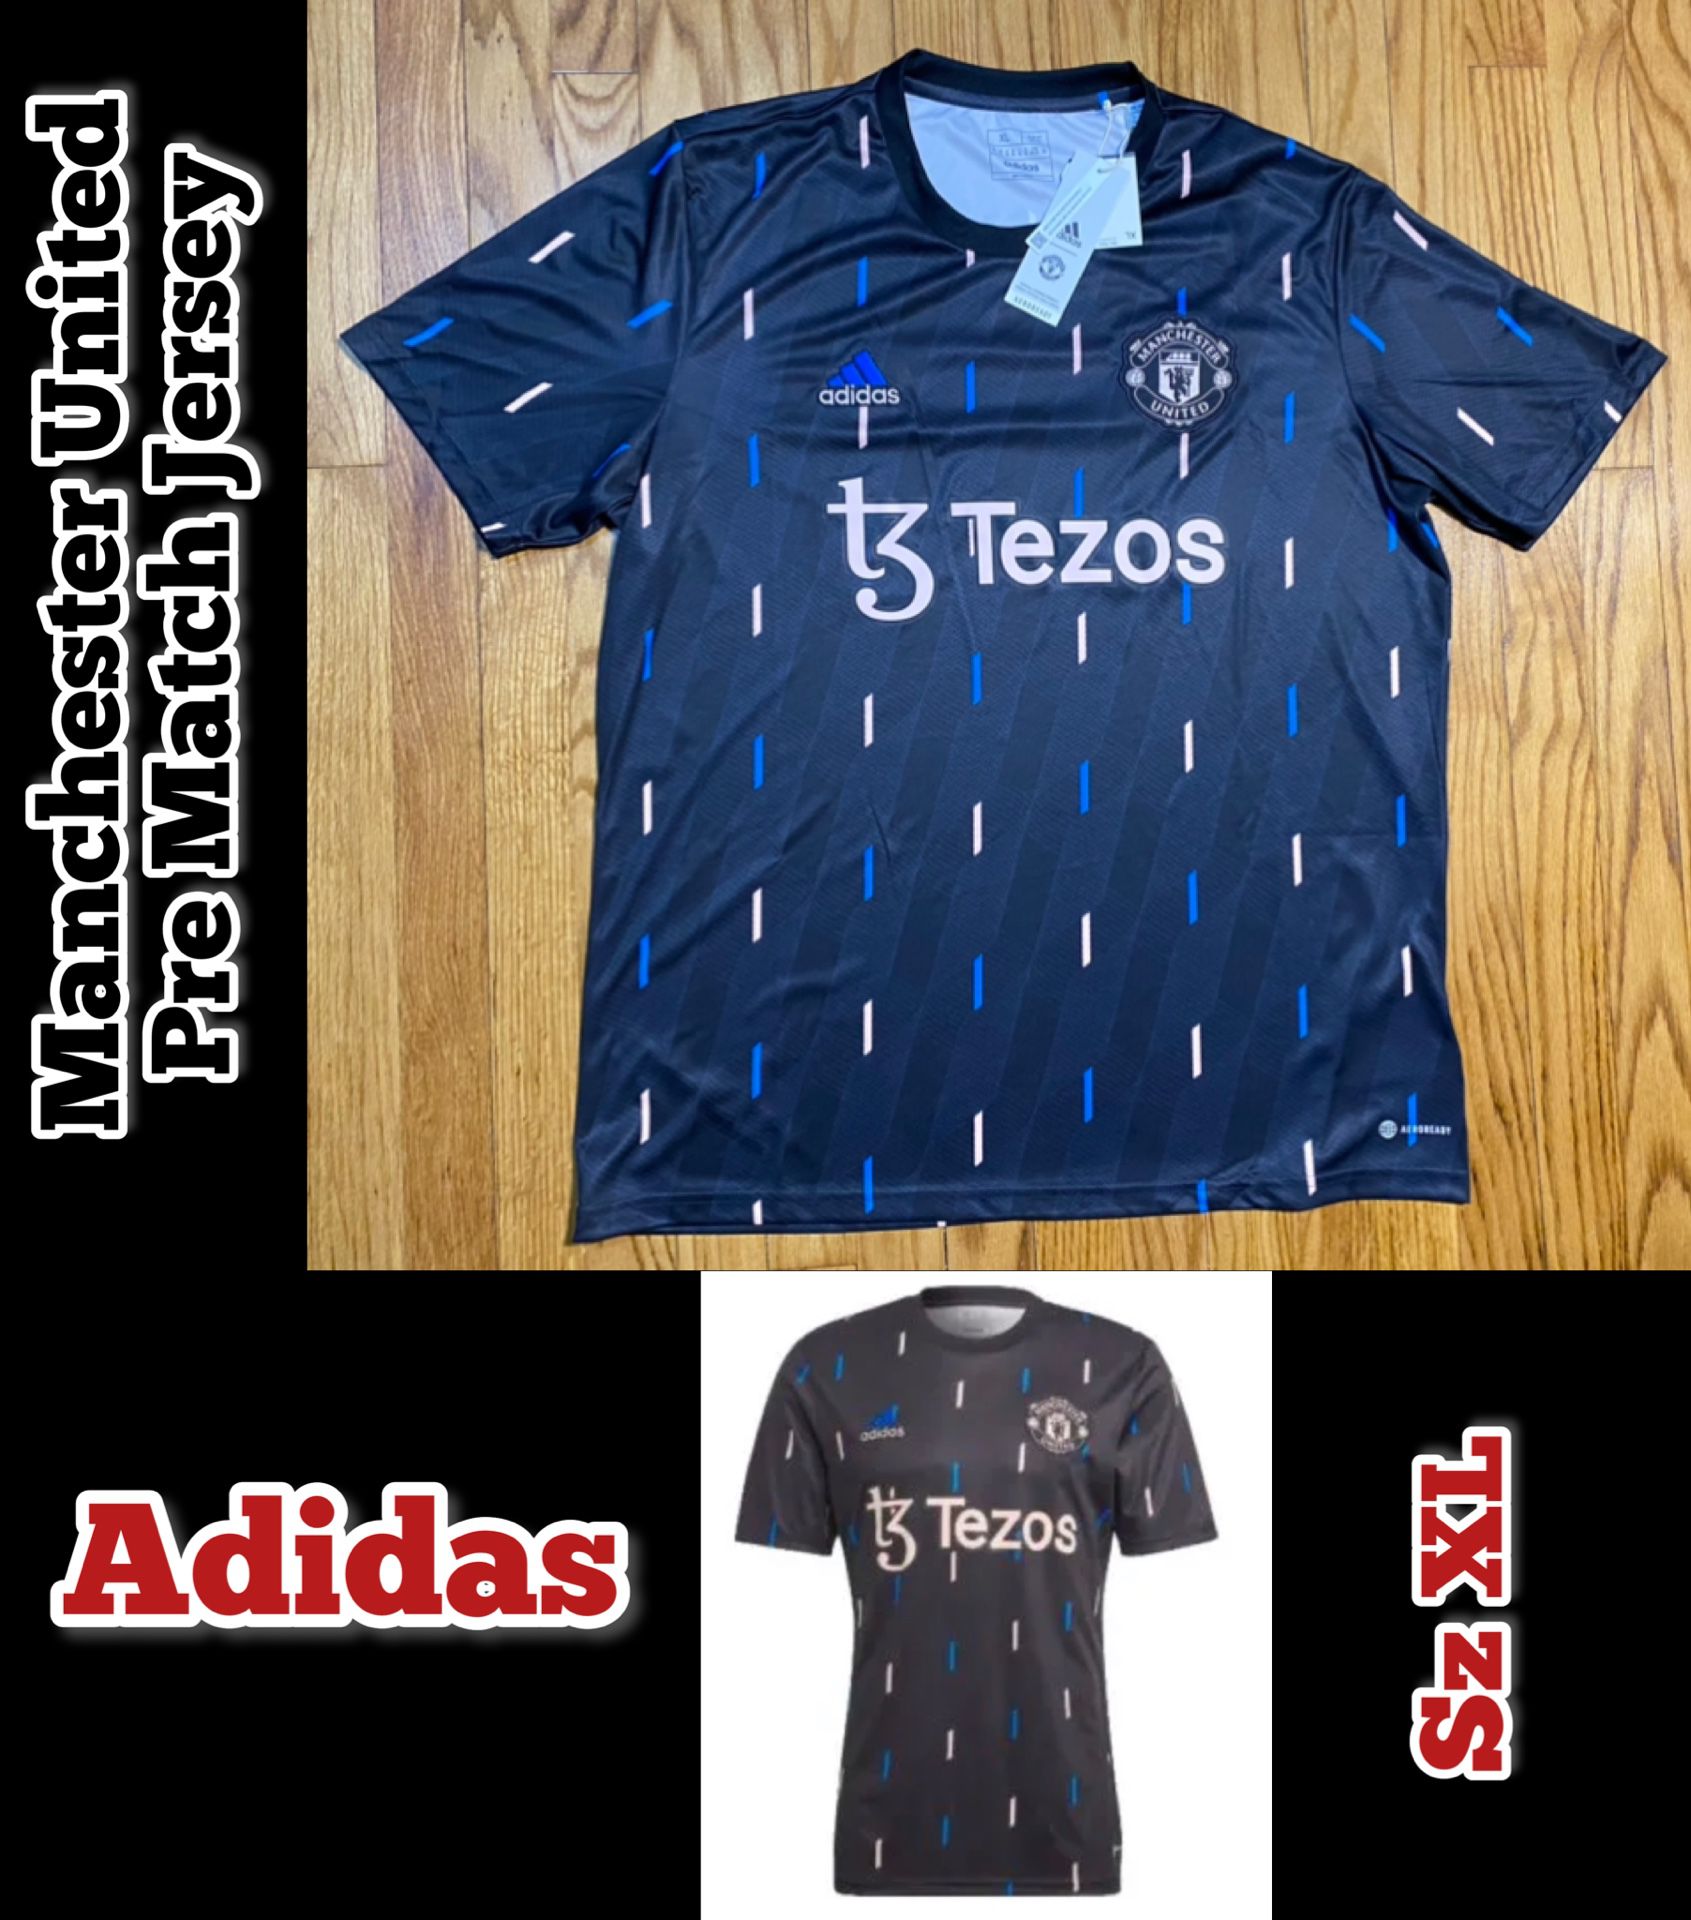 Adidas Manchester United Pre Match Jersey Black Men’s Sz XL New